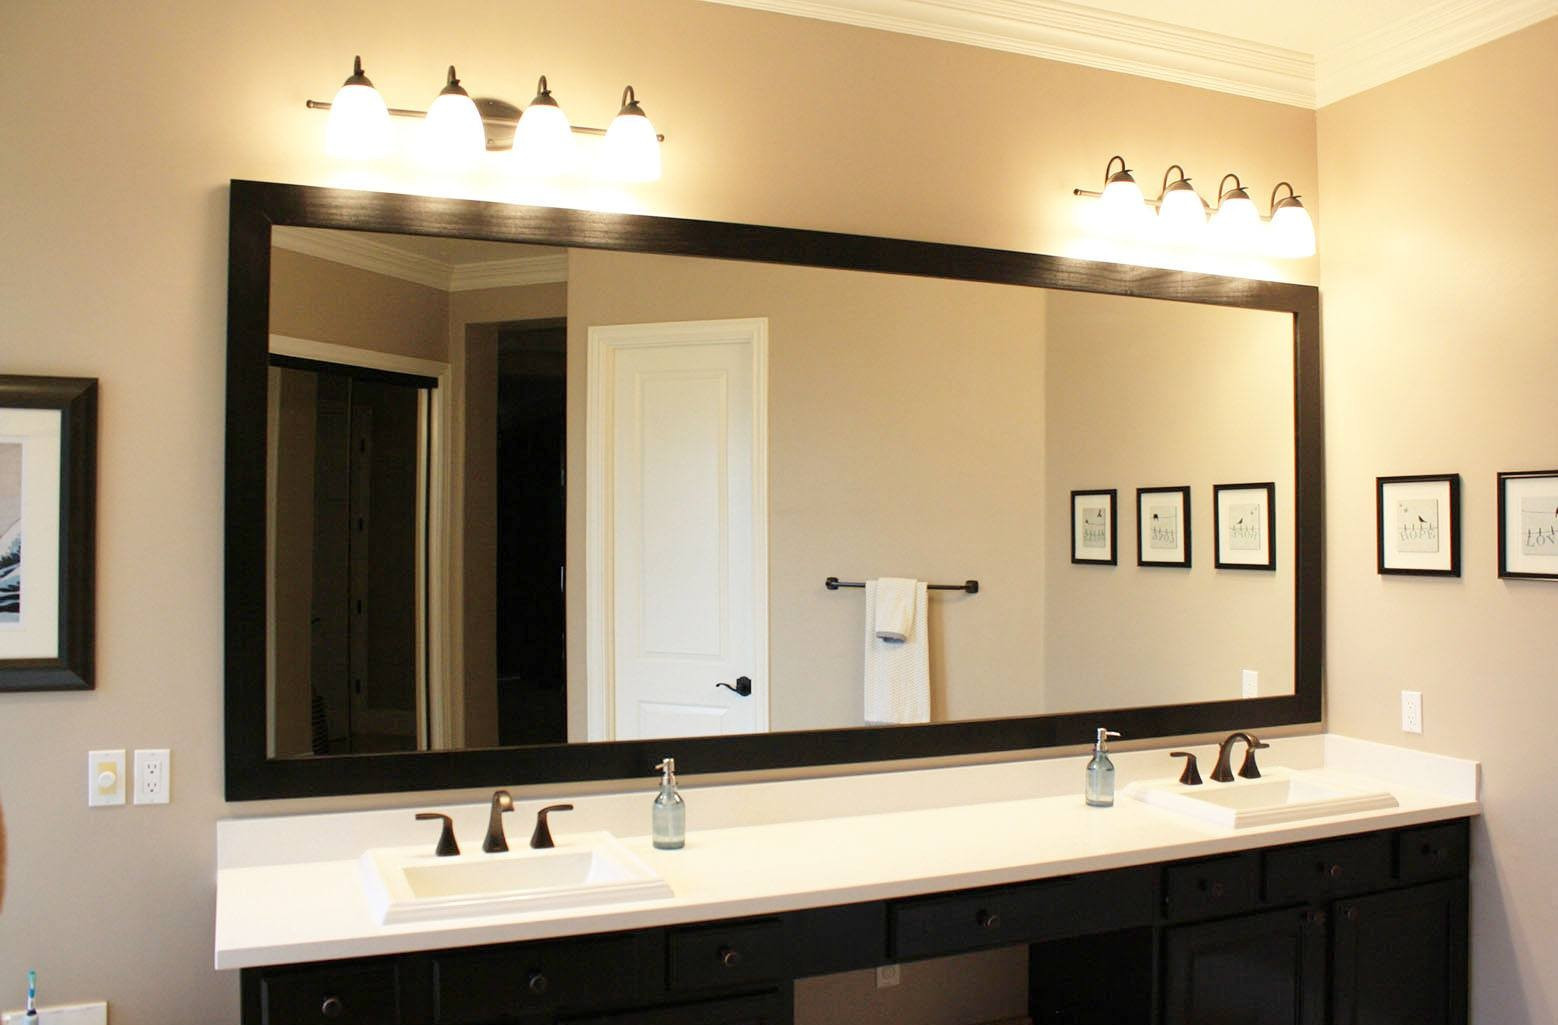 Custom Framed Bathroom Mirrors
 Awesome How to Frame A Bathroom Mirror Tnto Section